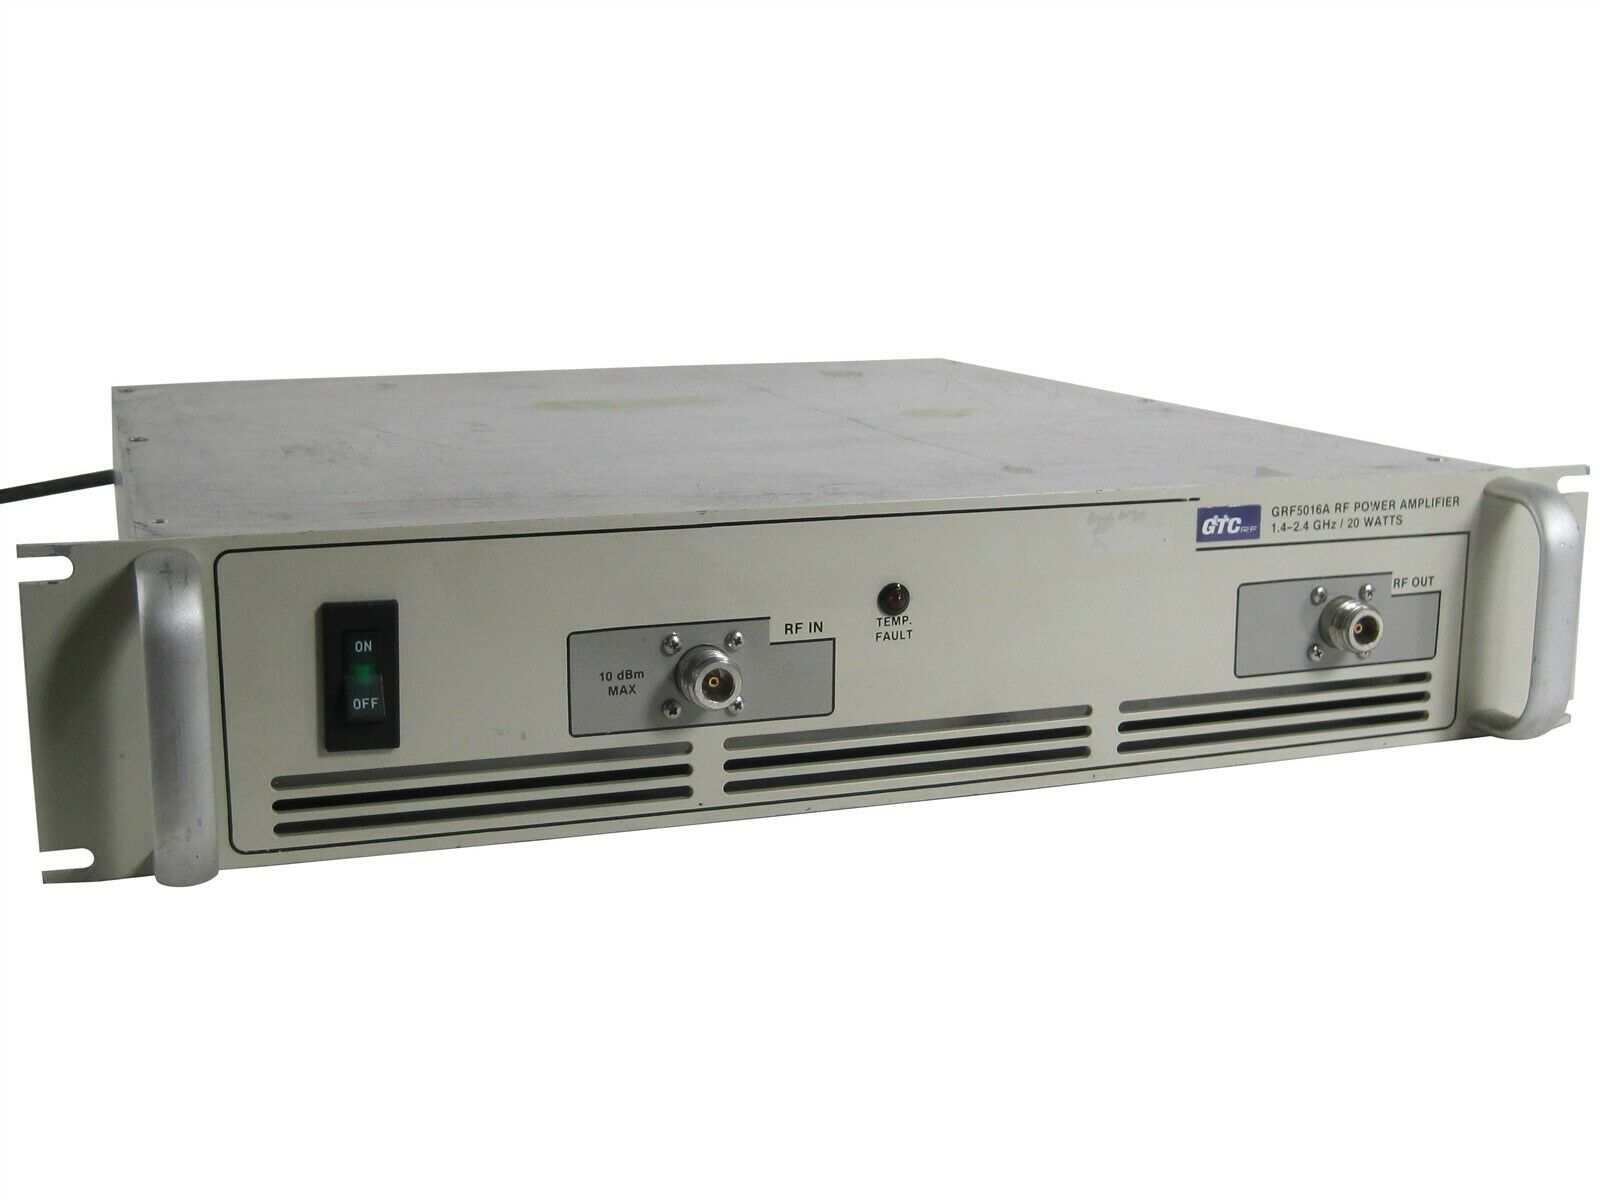 gtc-corporation-grf5016a-linear-rf-power-amplifier-1-4ghz-2-4ghz-20-watts-used-equipment-0.jpg